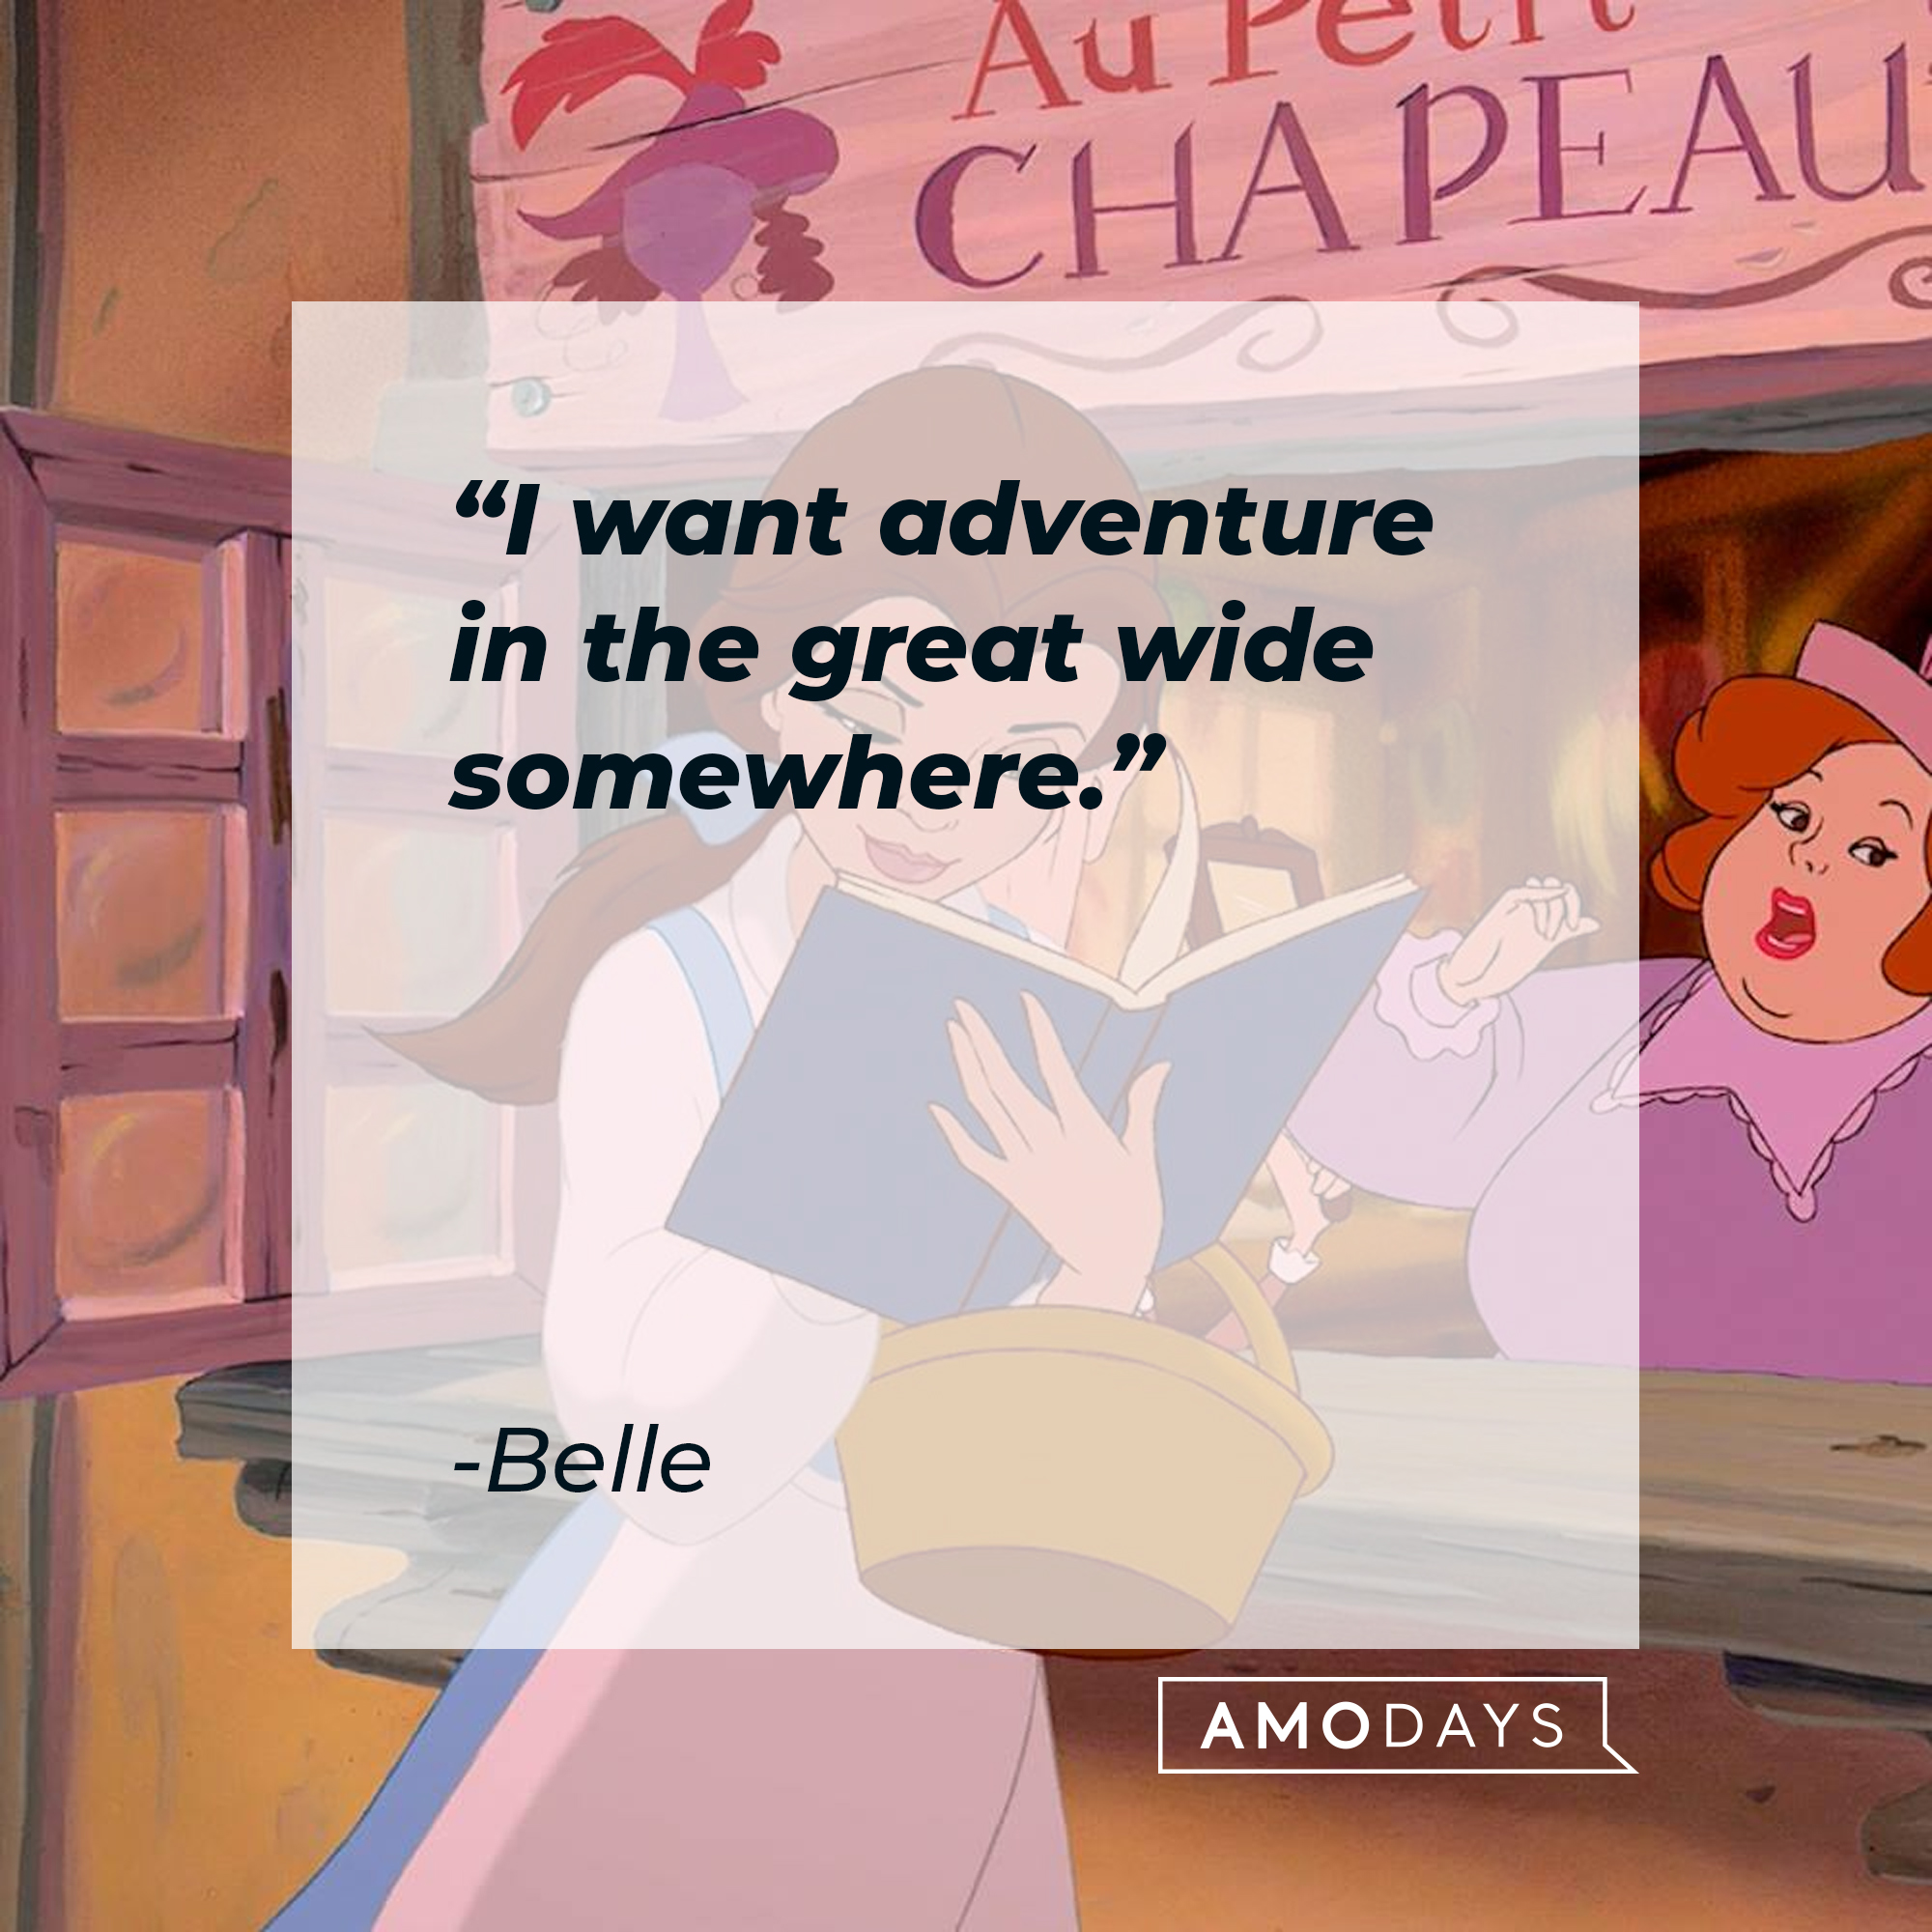 Belle's quote: "I want adventure in the great wide somewhere." | Source: Facebook.com/DisneyBeautyAndTheBeast